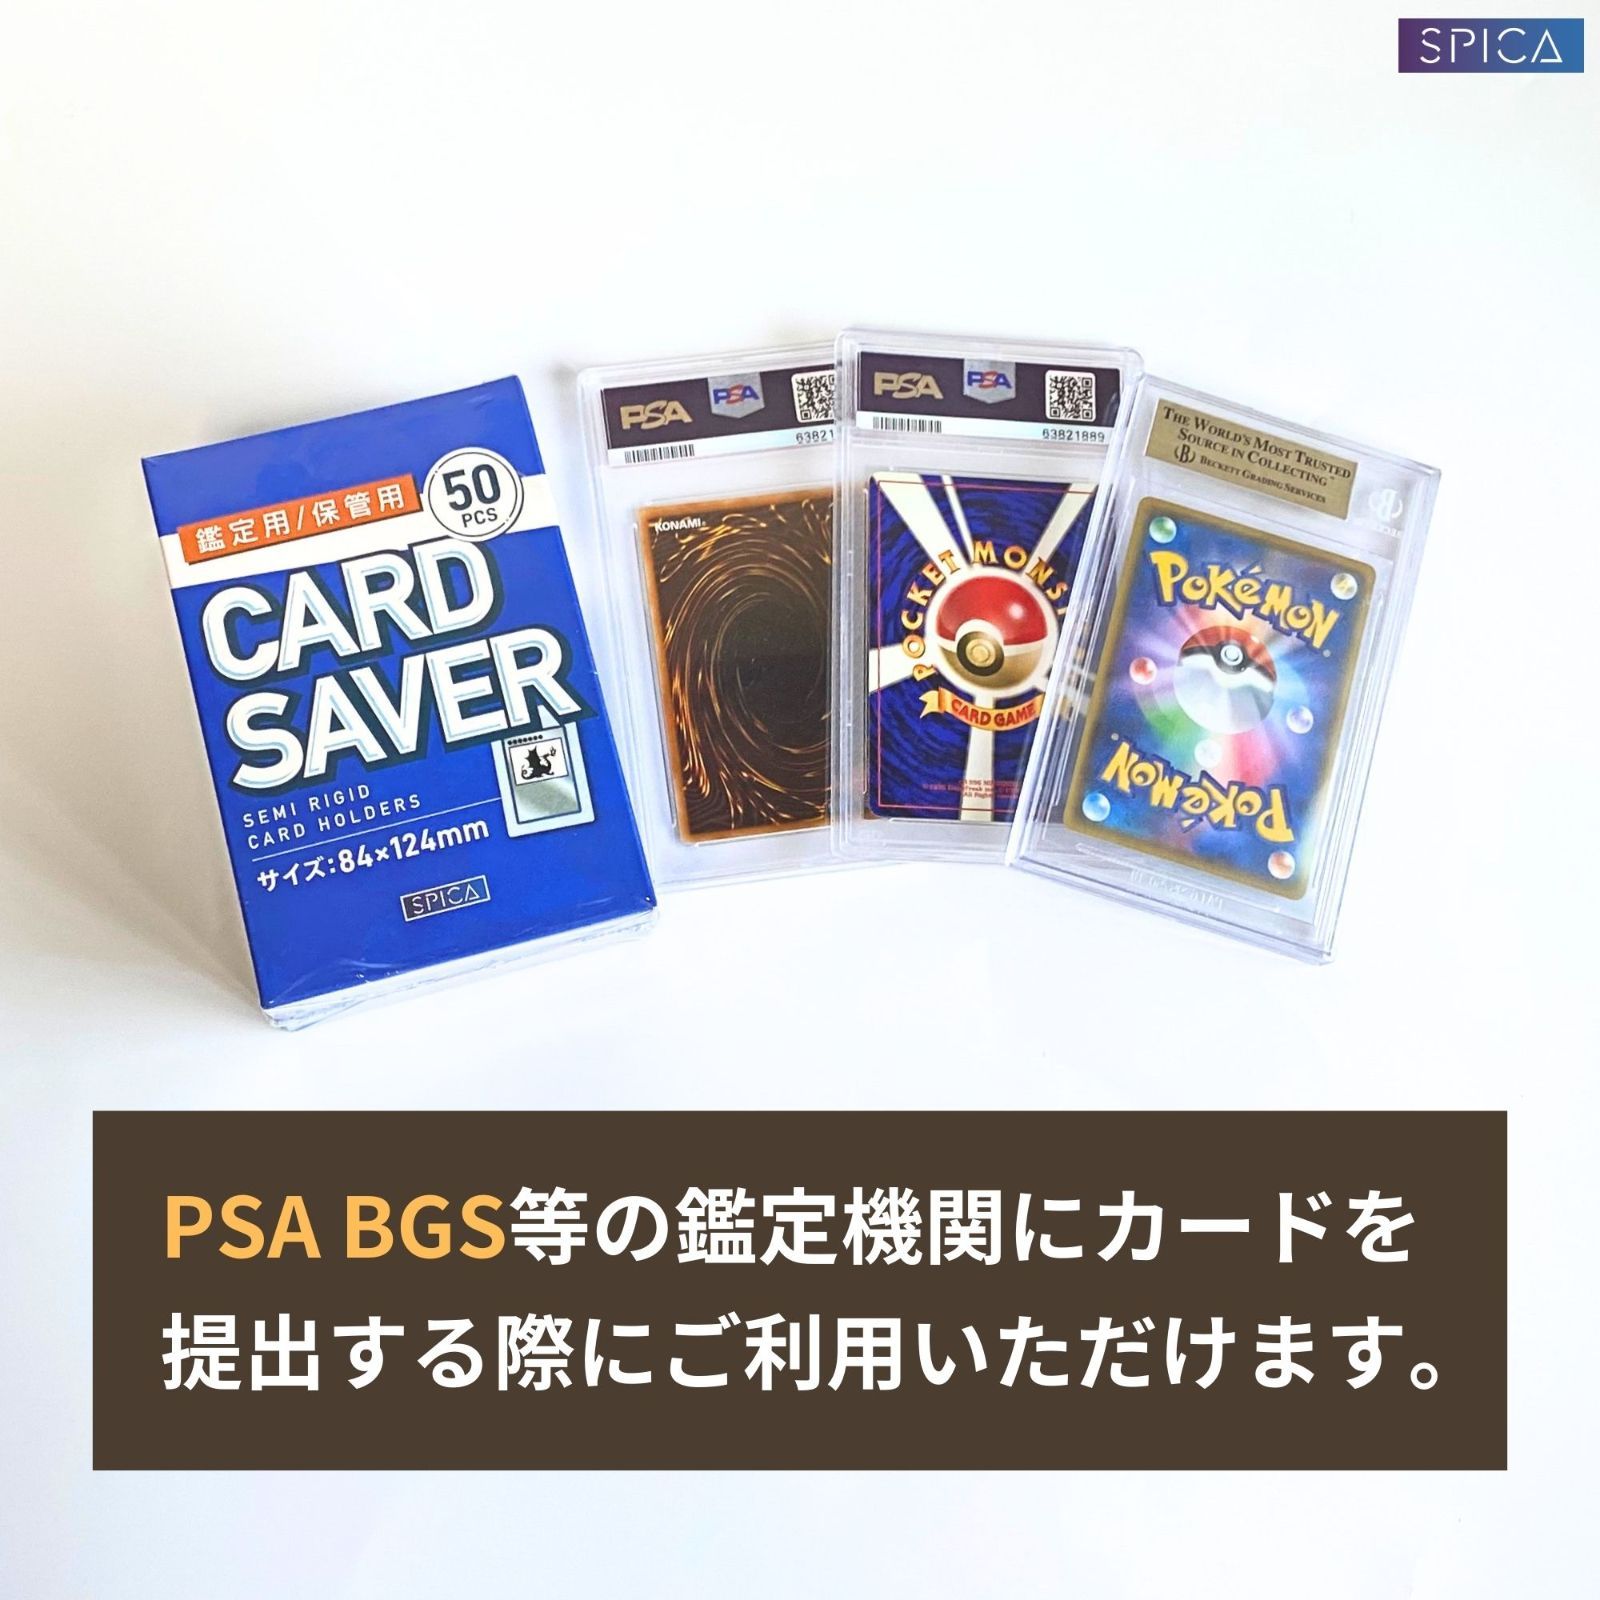 SPICA カードセーバー 100枚 PSA BGS ARS 提出用 鑑定用 カード 